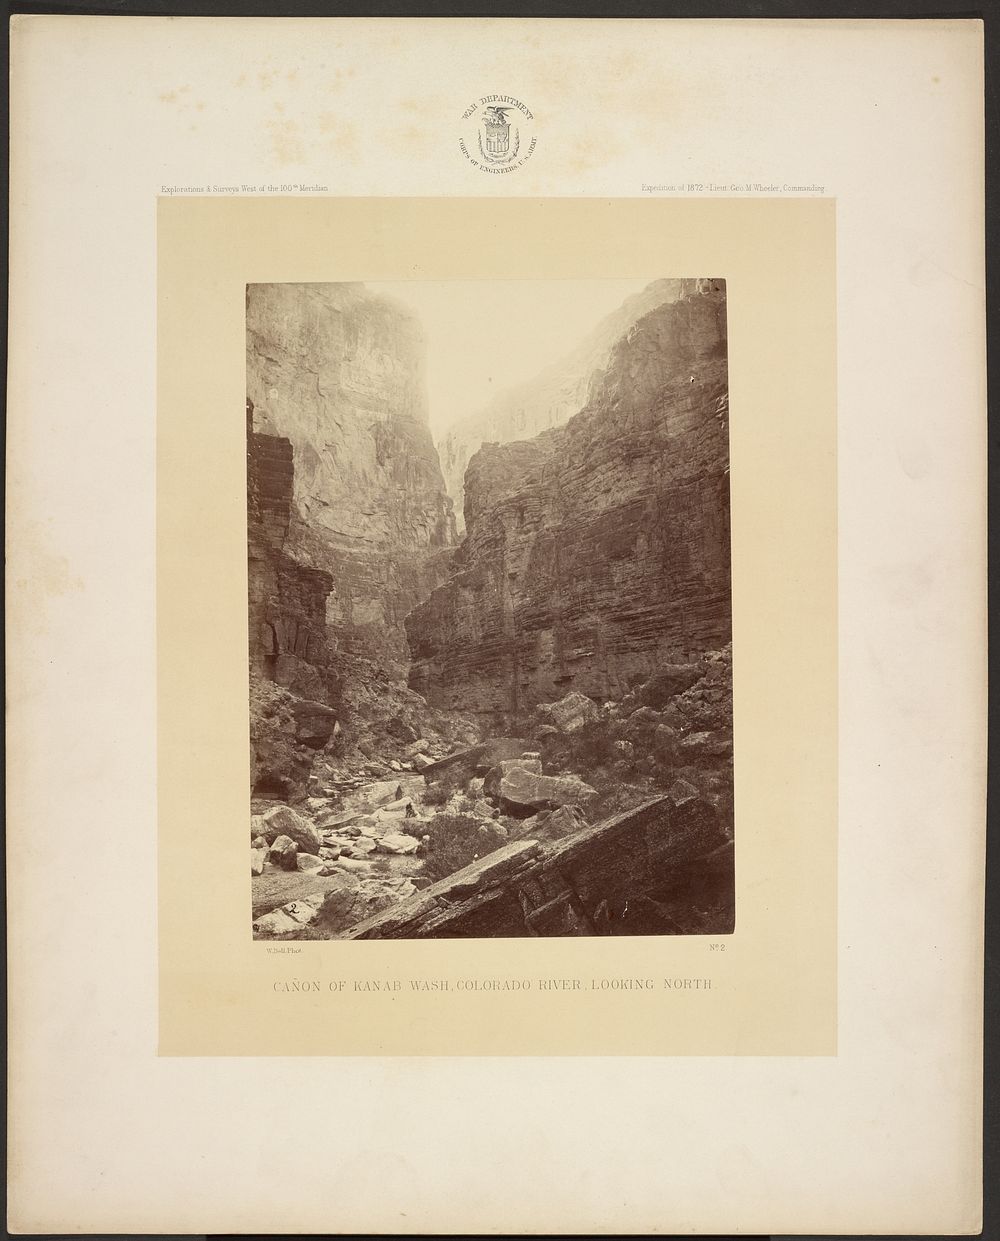 Cañon of Kanab Wash, Colorado River, Looking North by William H Bell